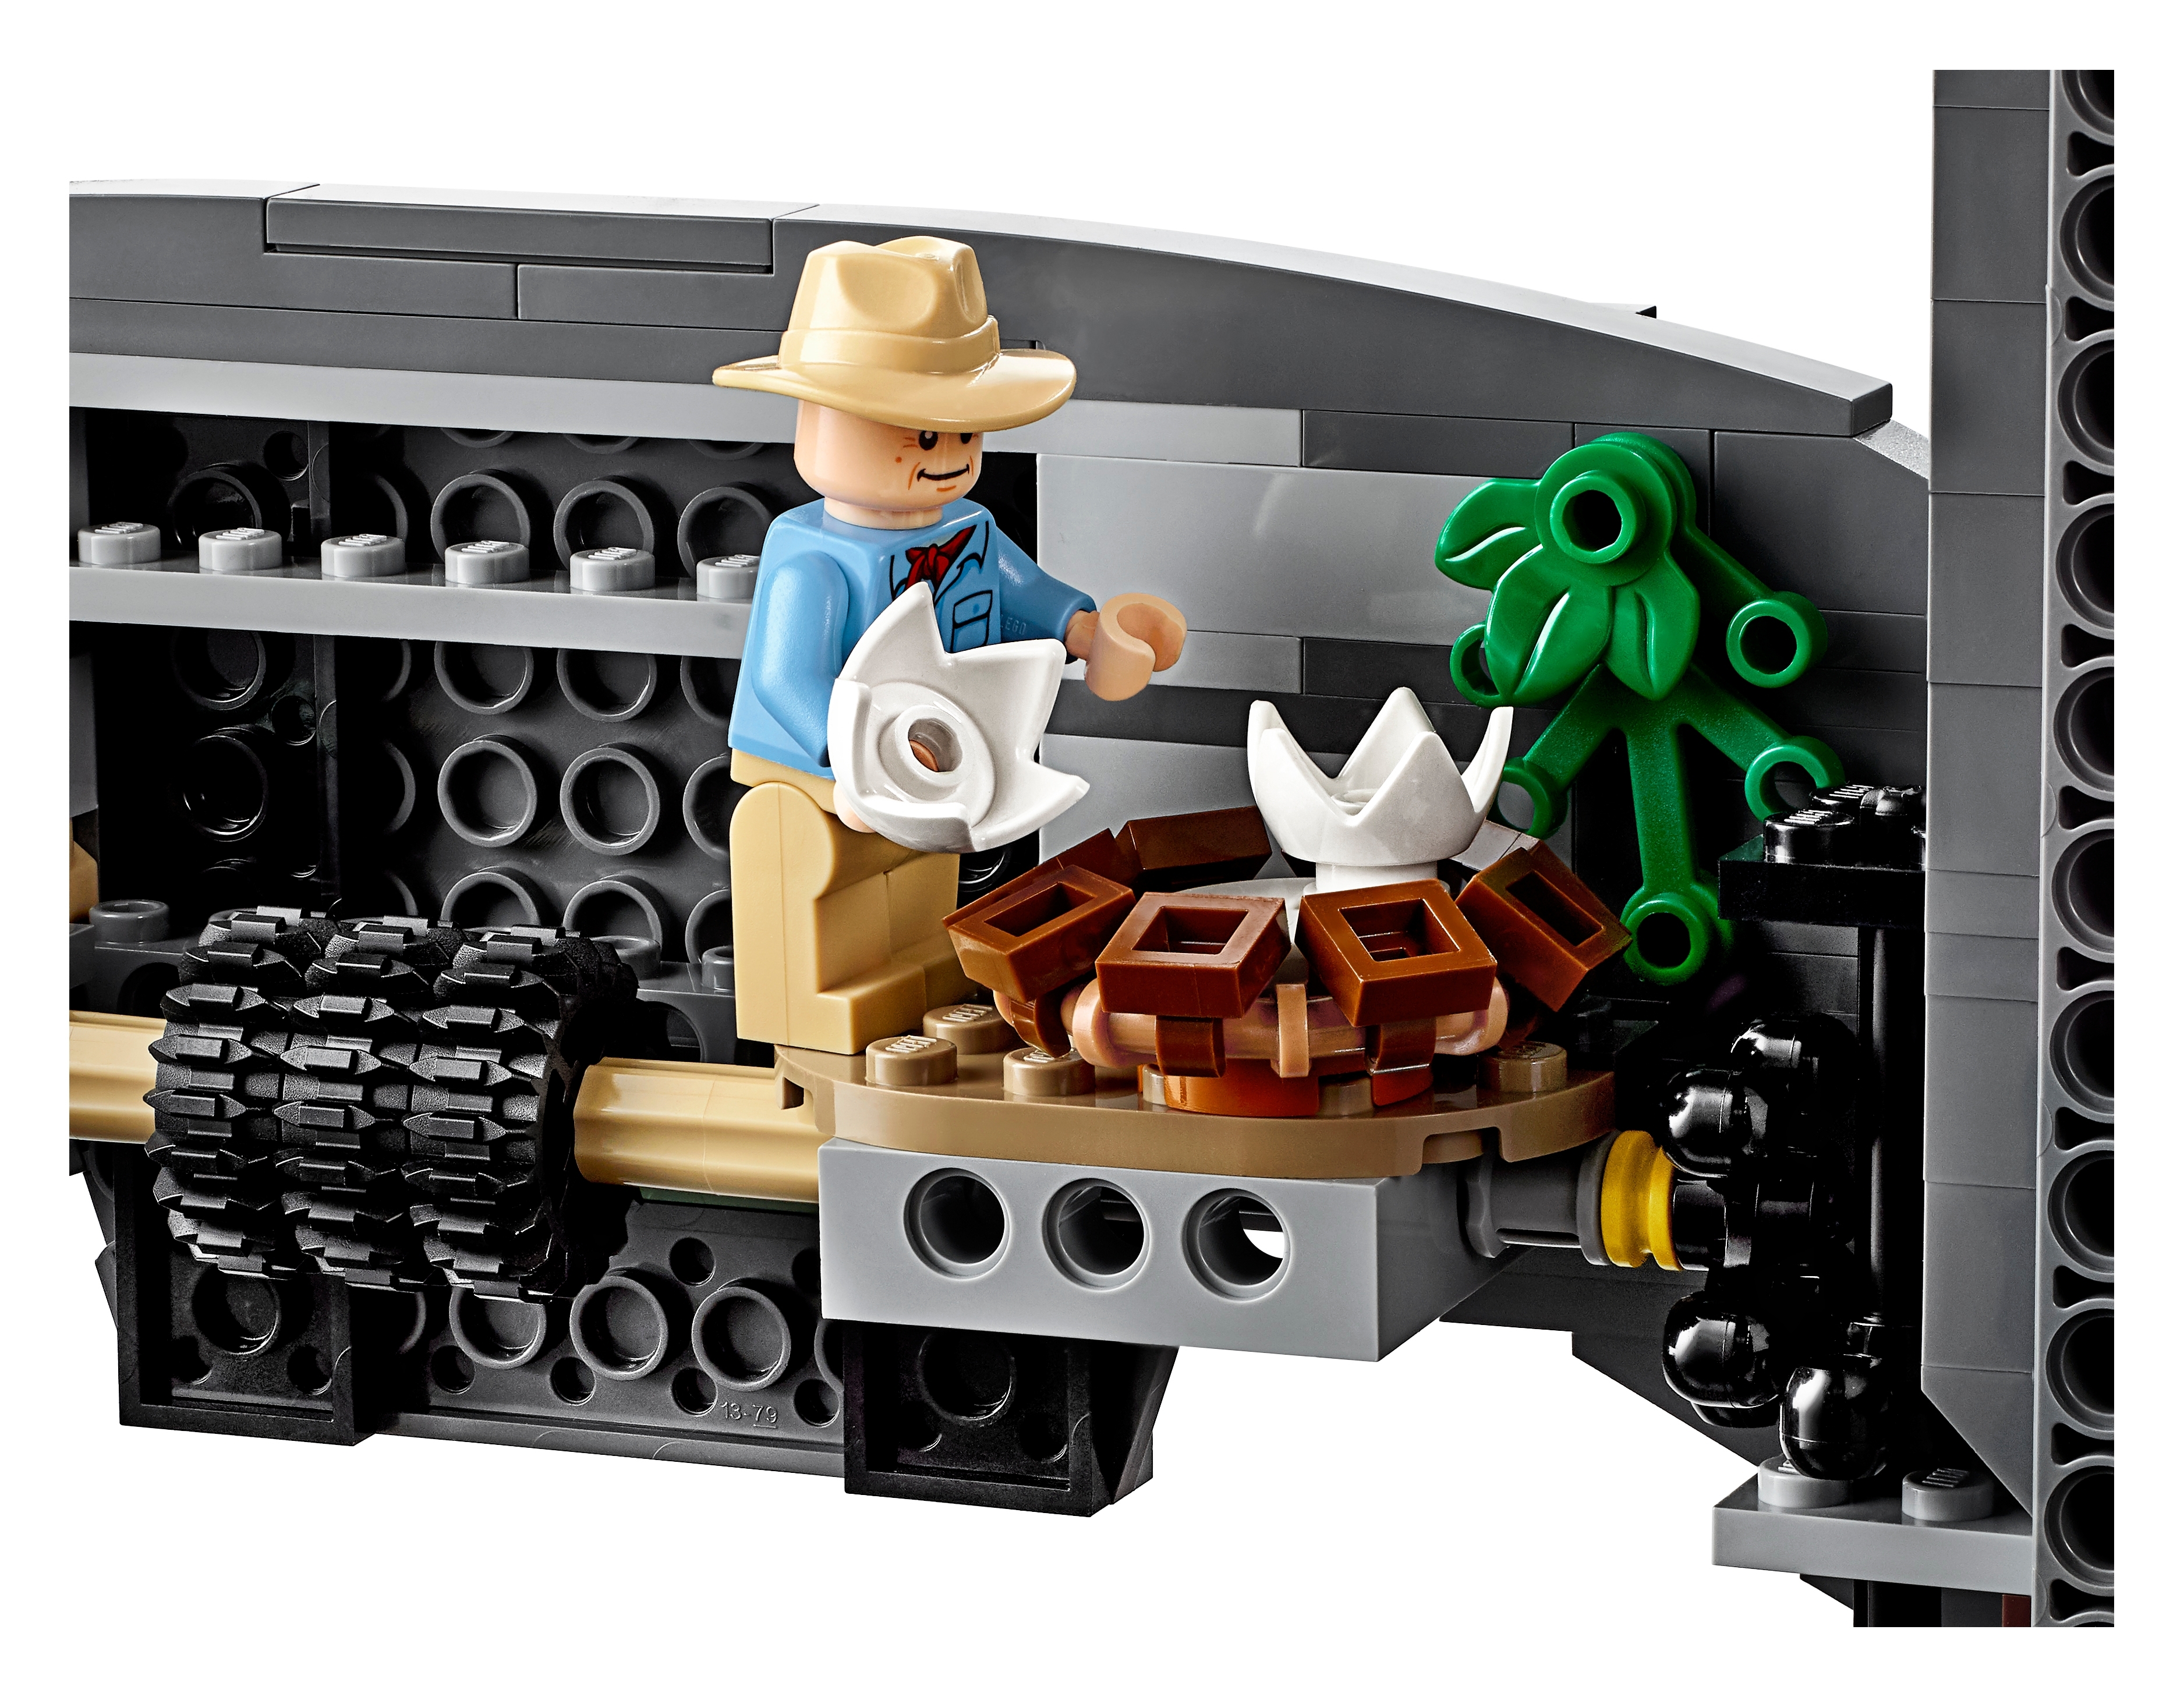 JAIMAN TOYS LEGO Jurassic World Jurassic Park: T. rex Rampage 75936  Building Kit (3120 Pcs),Multicolor